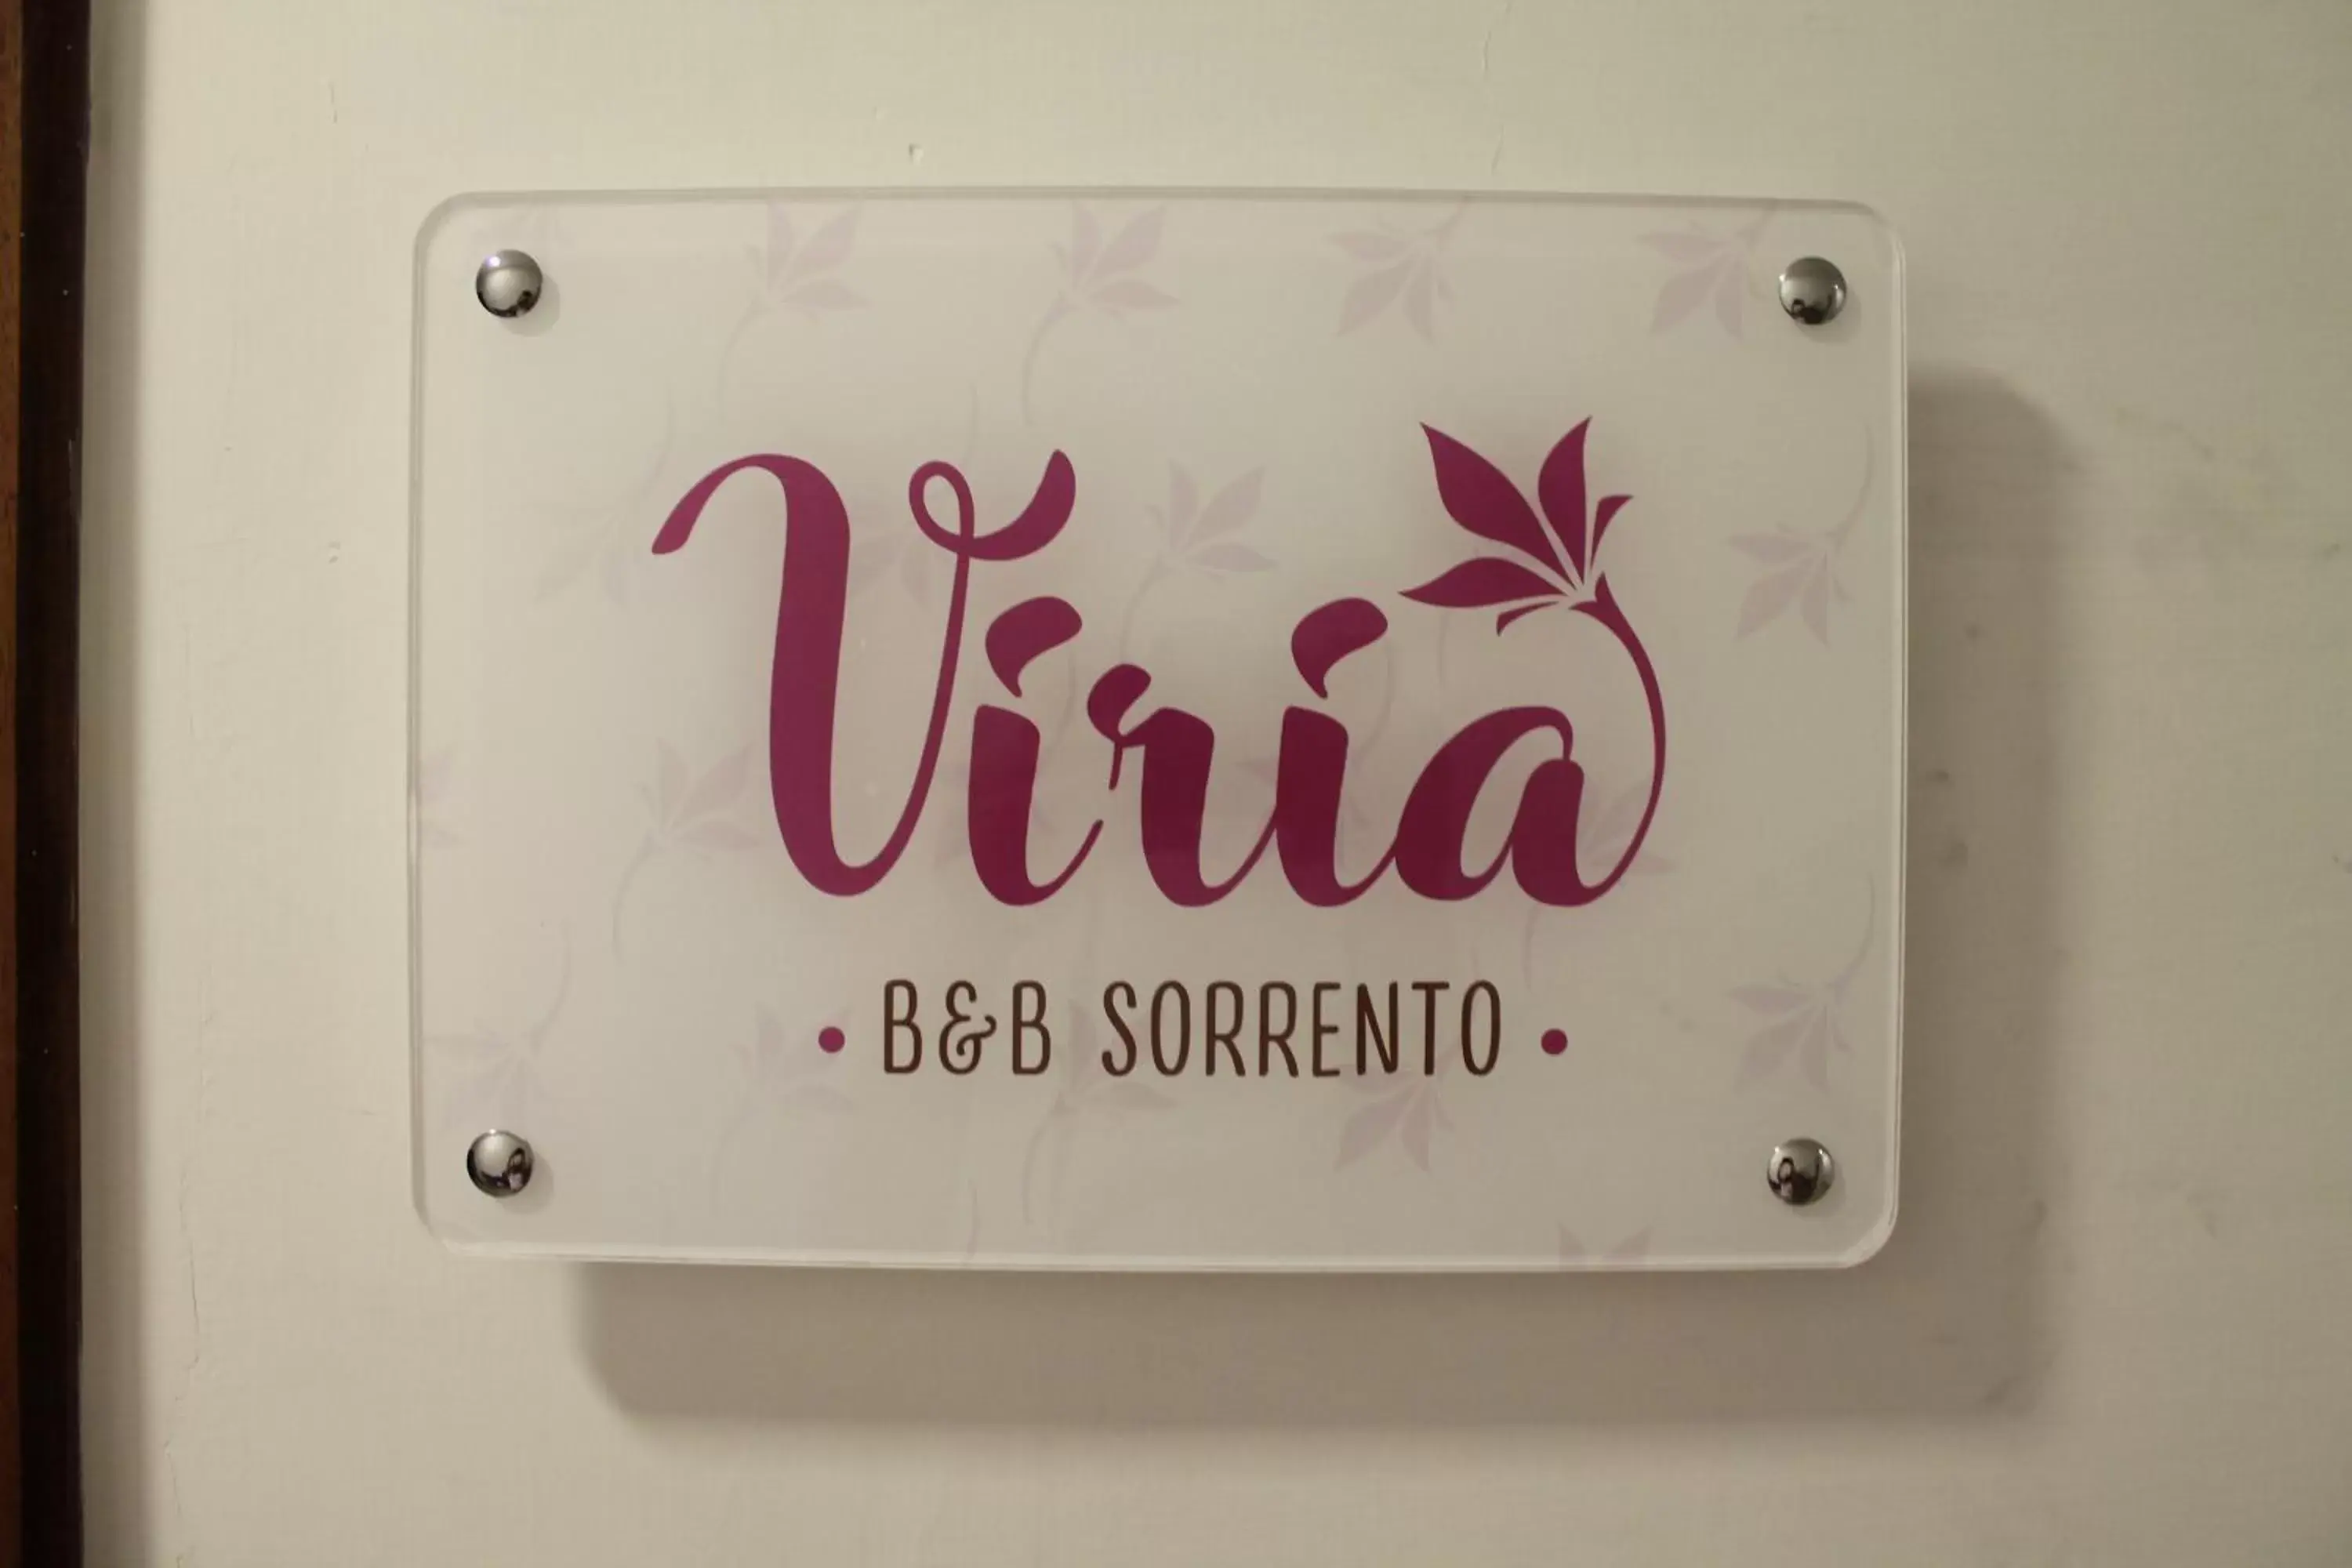 Property logo or sign in Viria B&B Sorrento